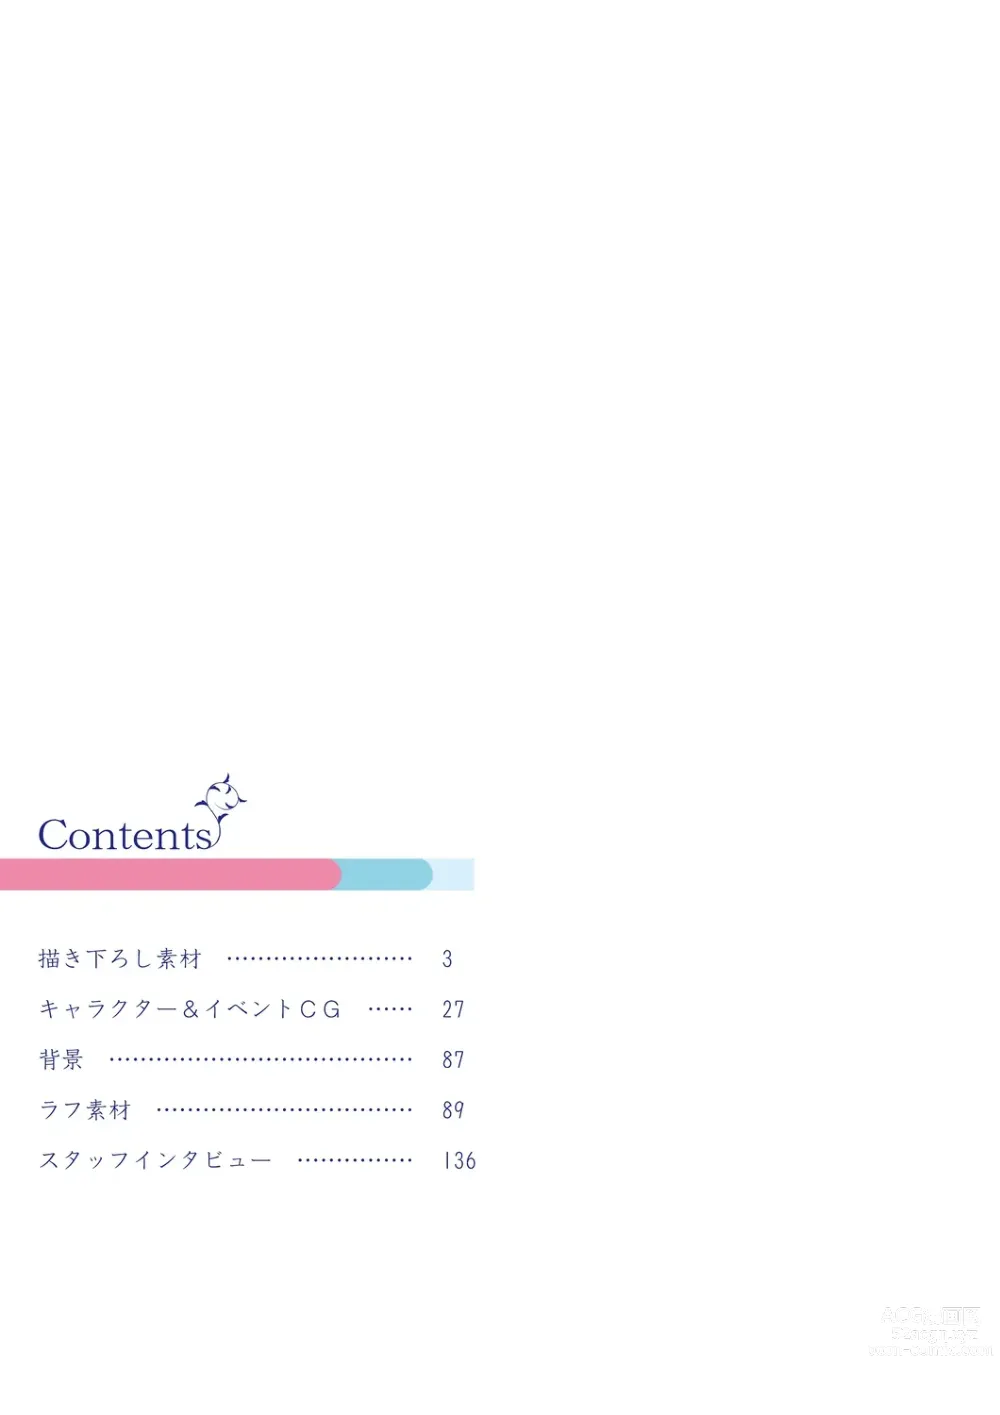 Page 4 of manga Natsuzora Kanata Official Visual Fan Book